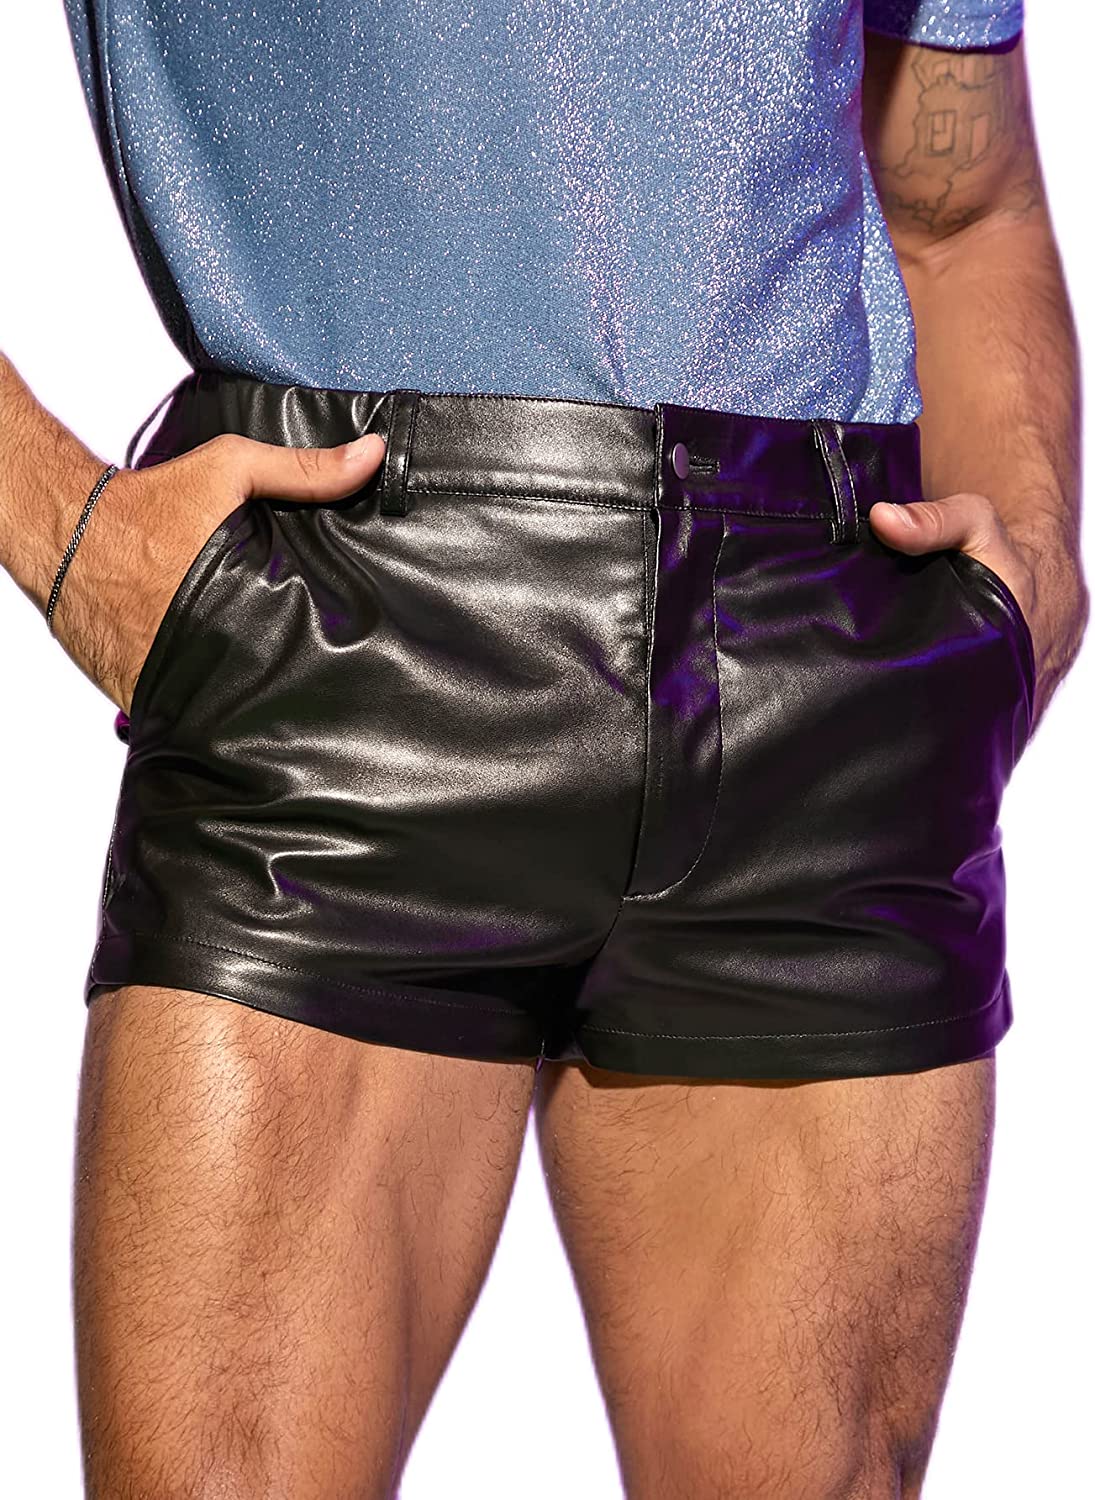 LZLRUN Rainbow Reflective Shorts Pants Men Fluorescent Trousers Casual Night Jogger